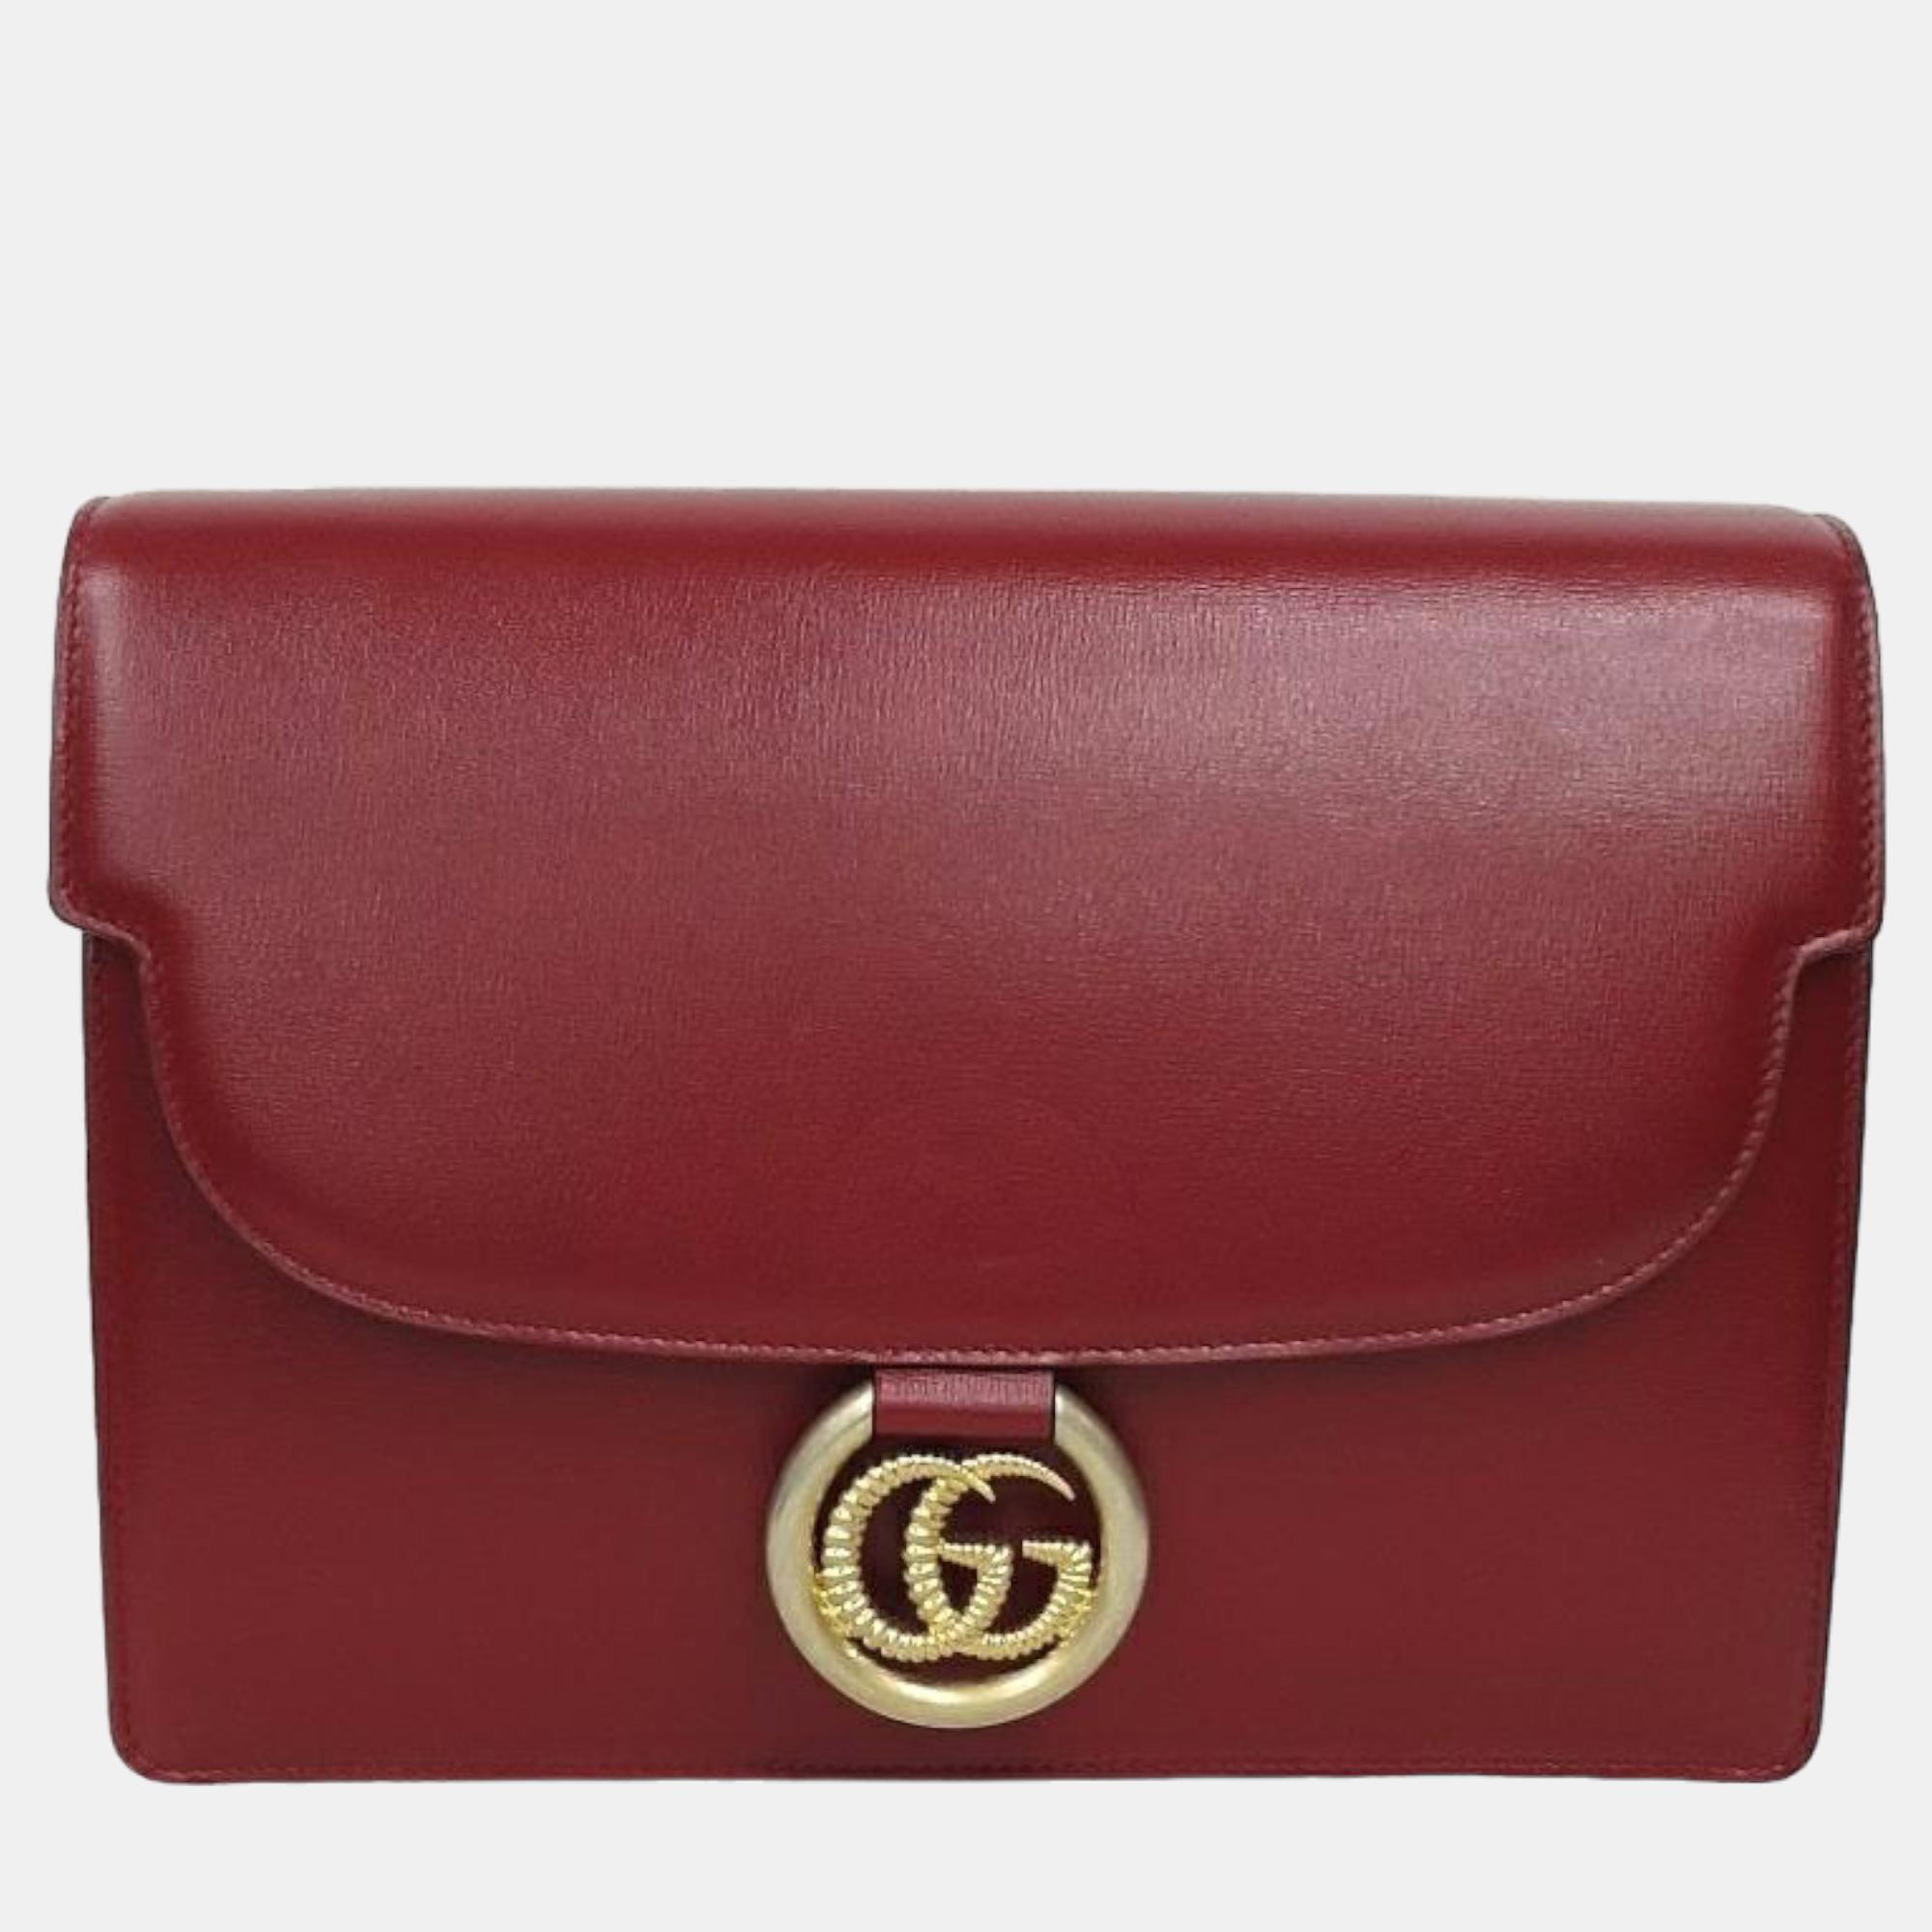 Gucci red leather gg ring shoulder bag